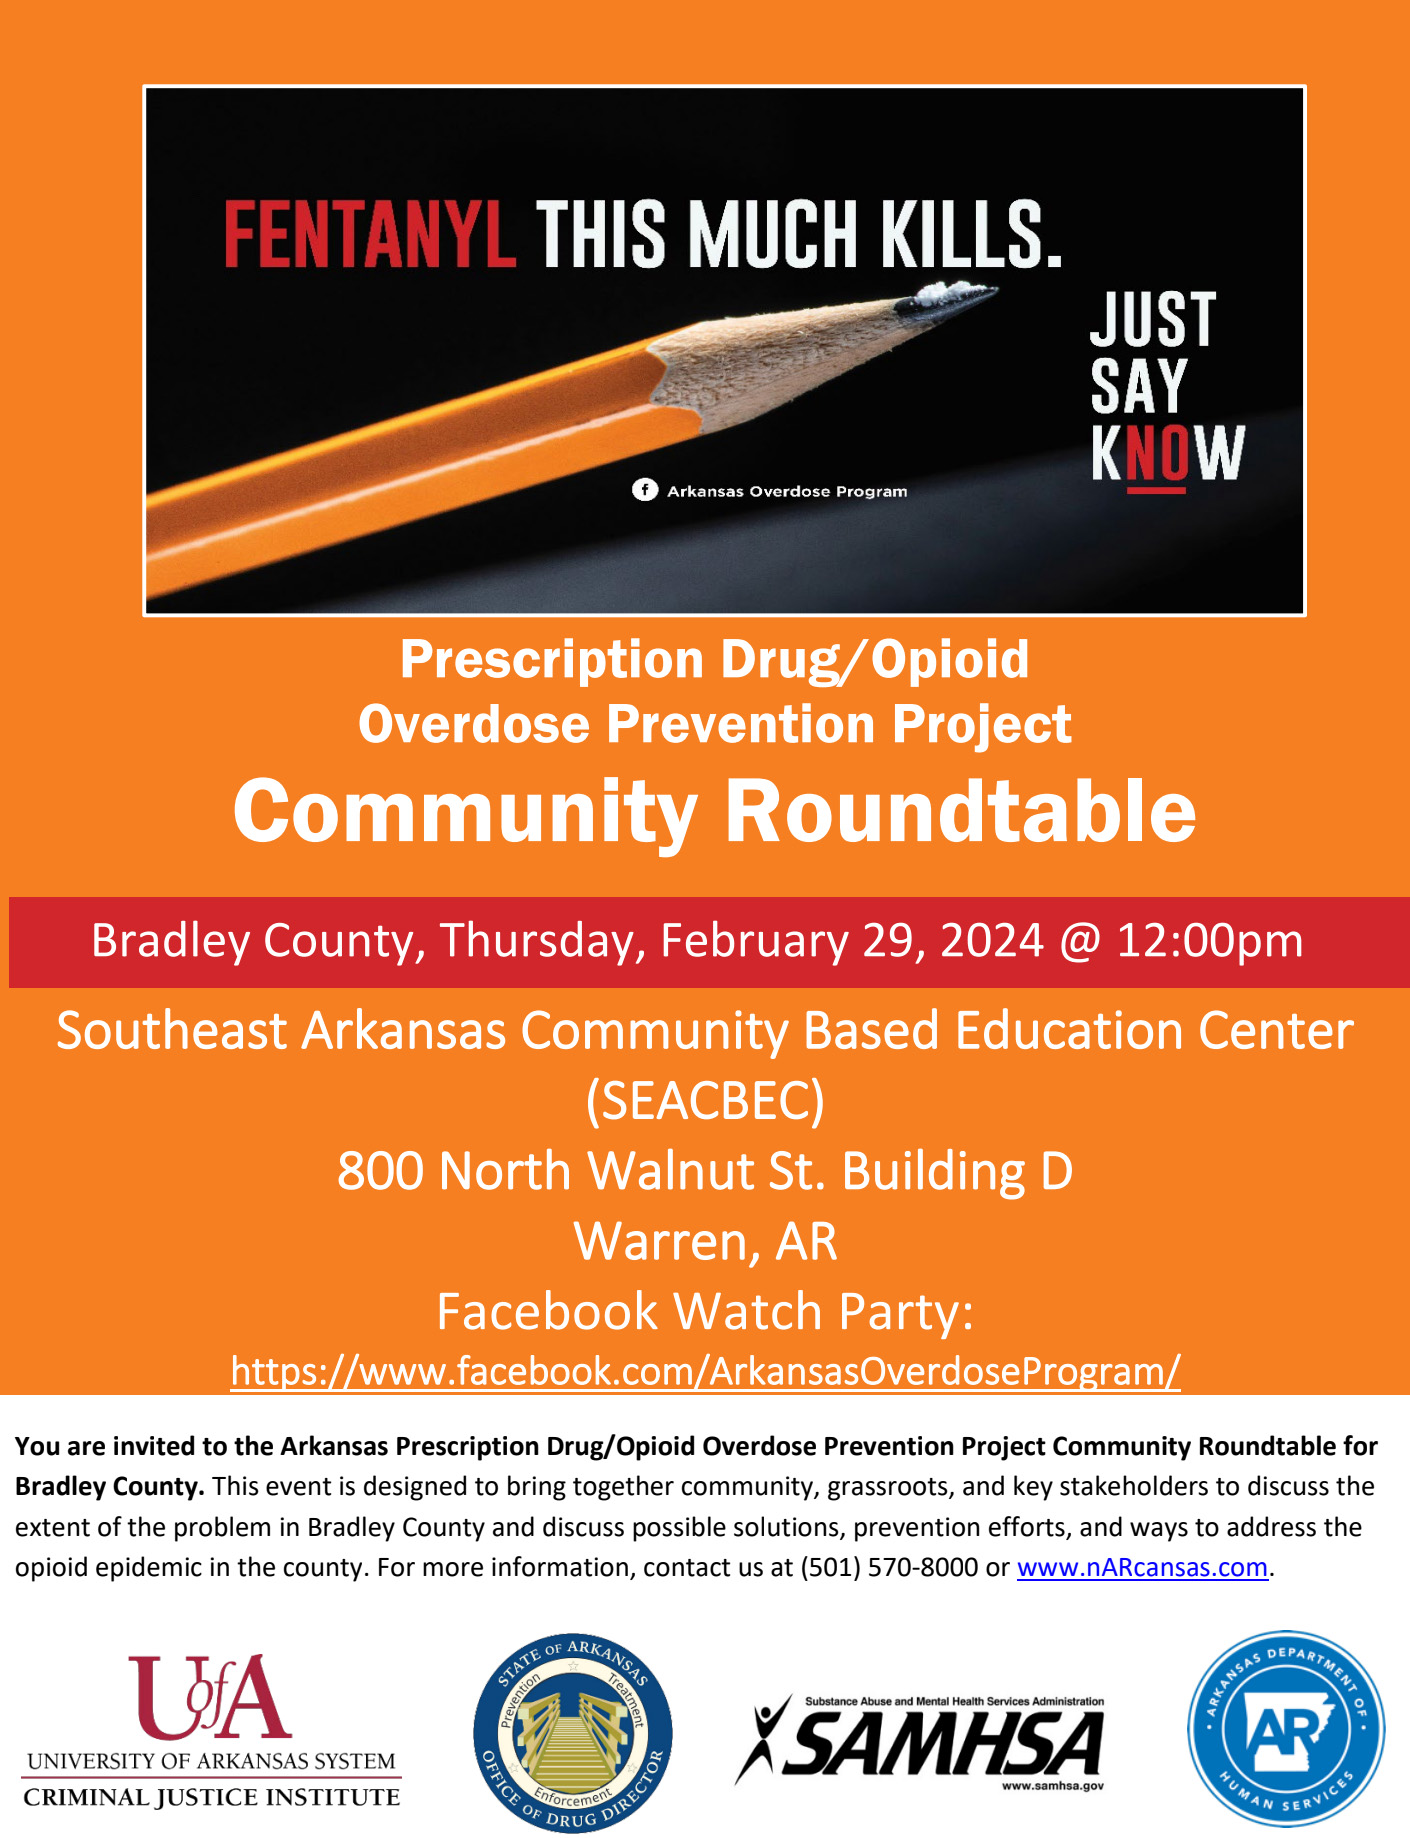 Prescription drug/opioid overdose community roundtable event for Bradley County set for Feb 29